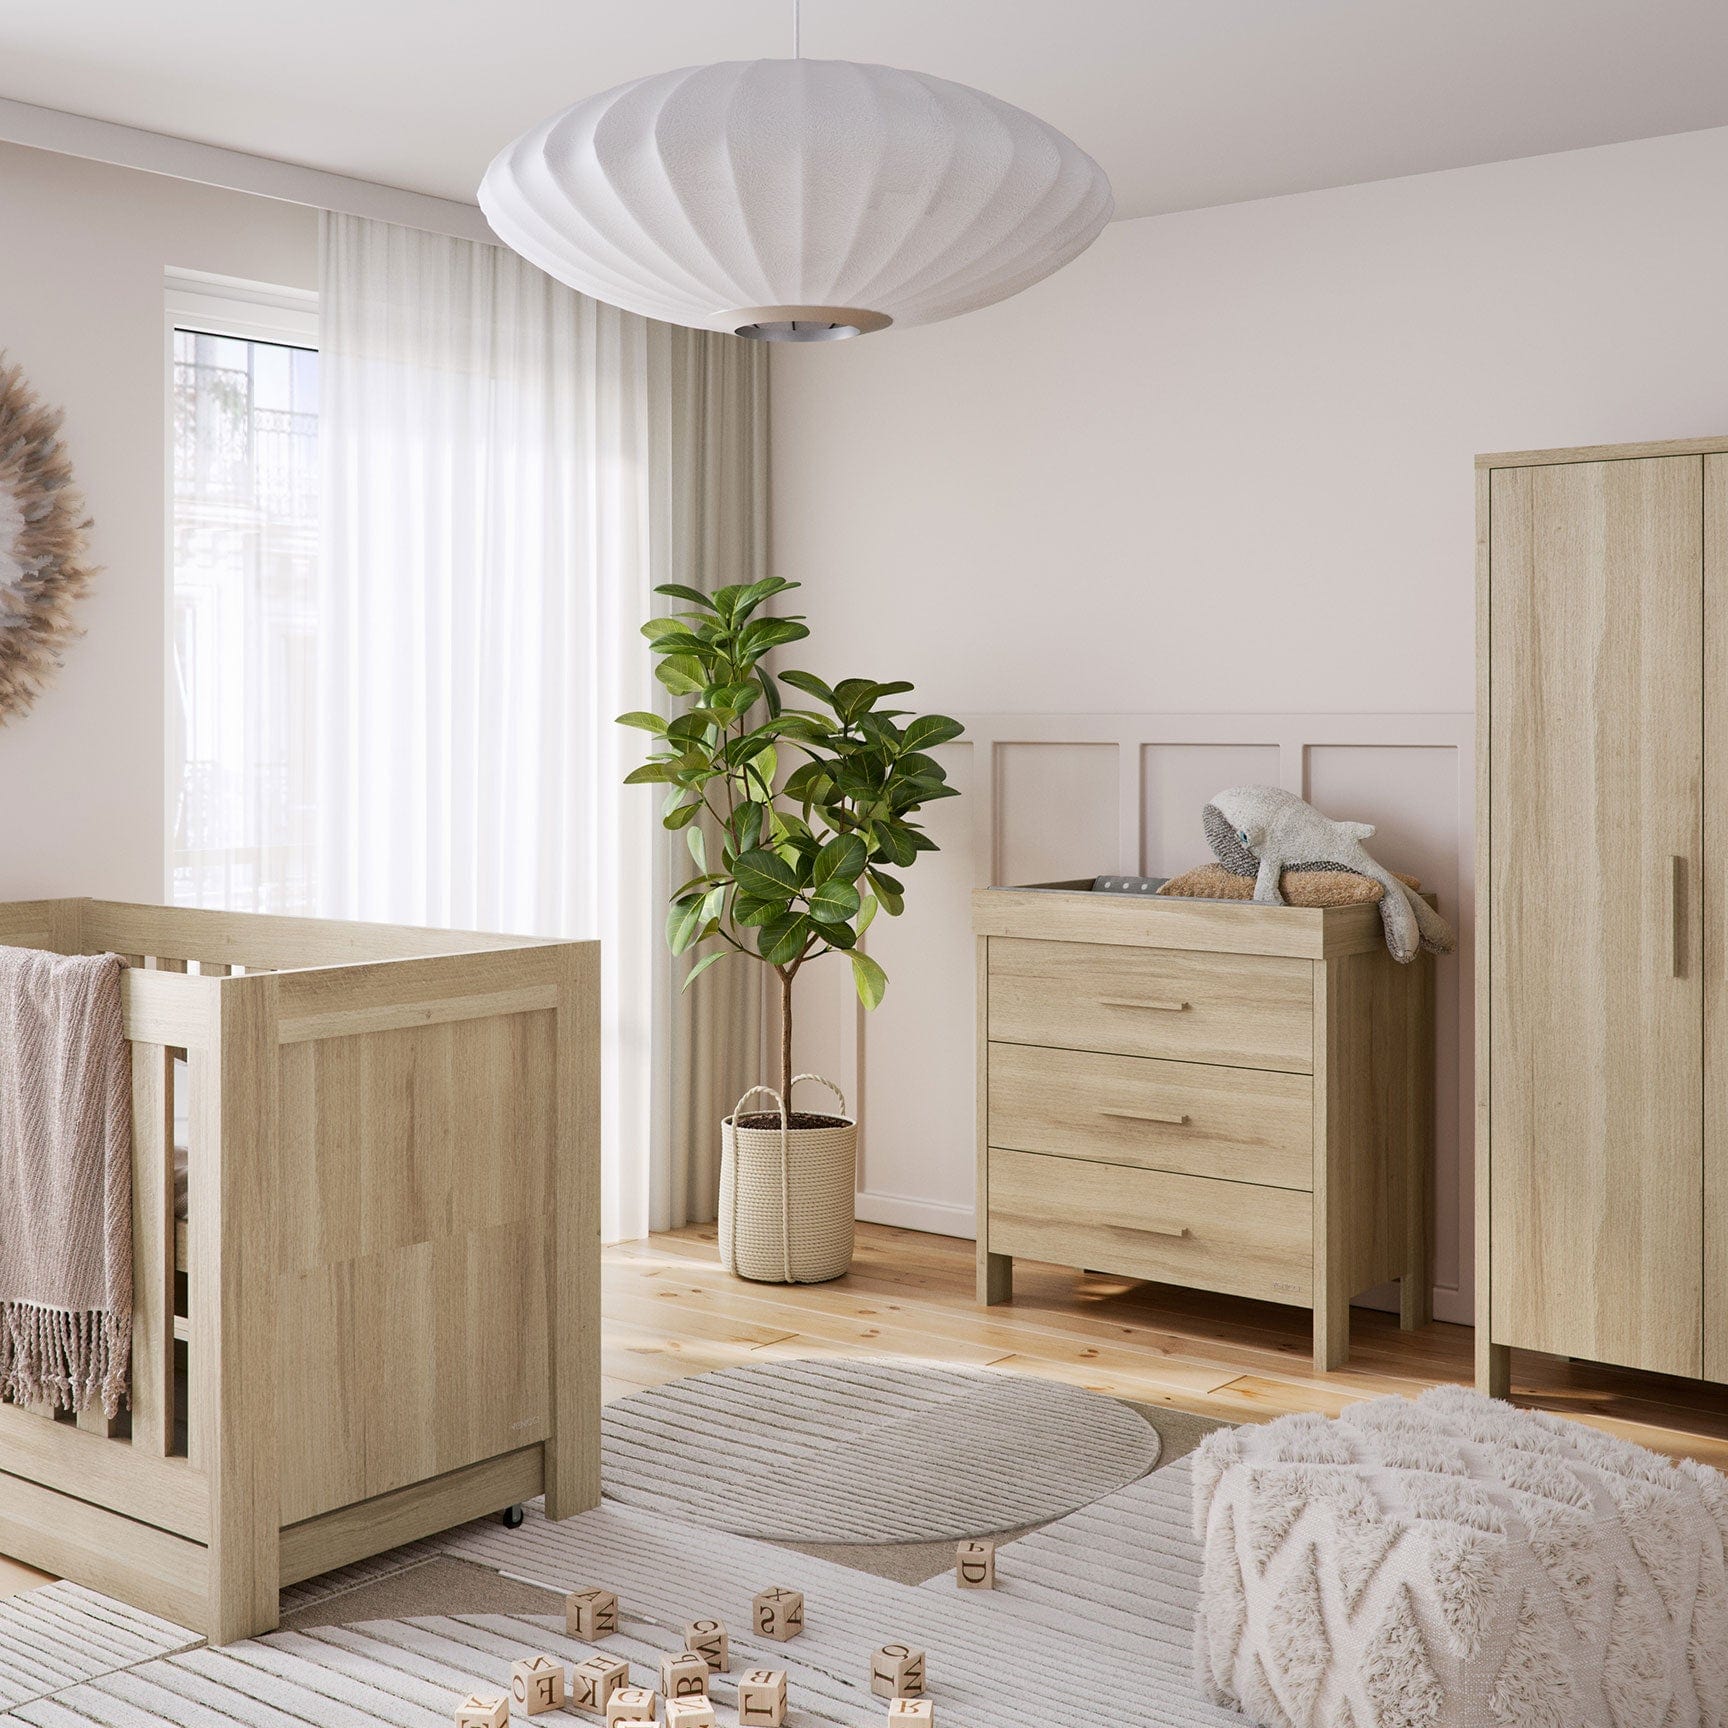 Venicci Nursery Room Sets Venicci Forenzo 2 Piece Wardrobe Roomset in Honey Oak